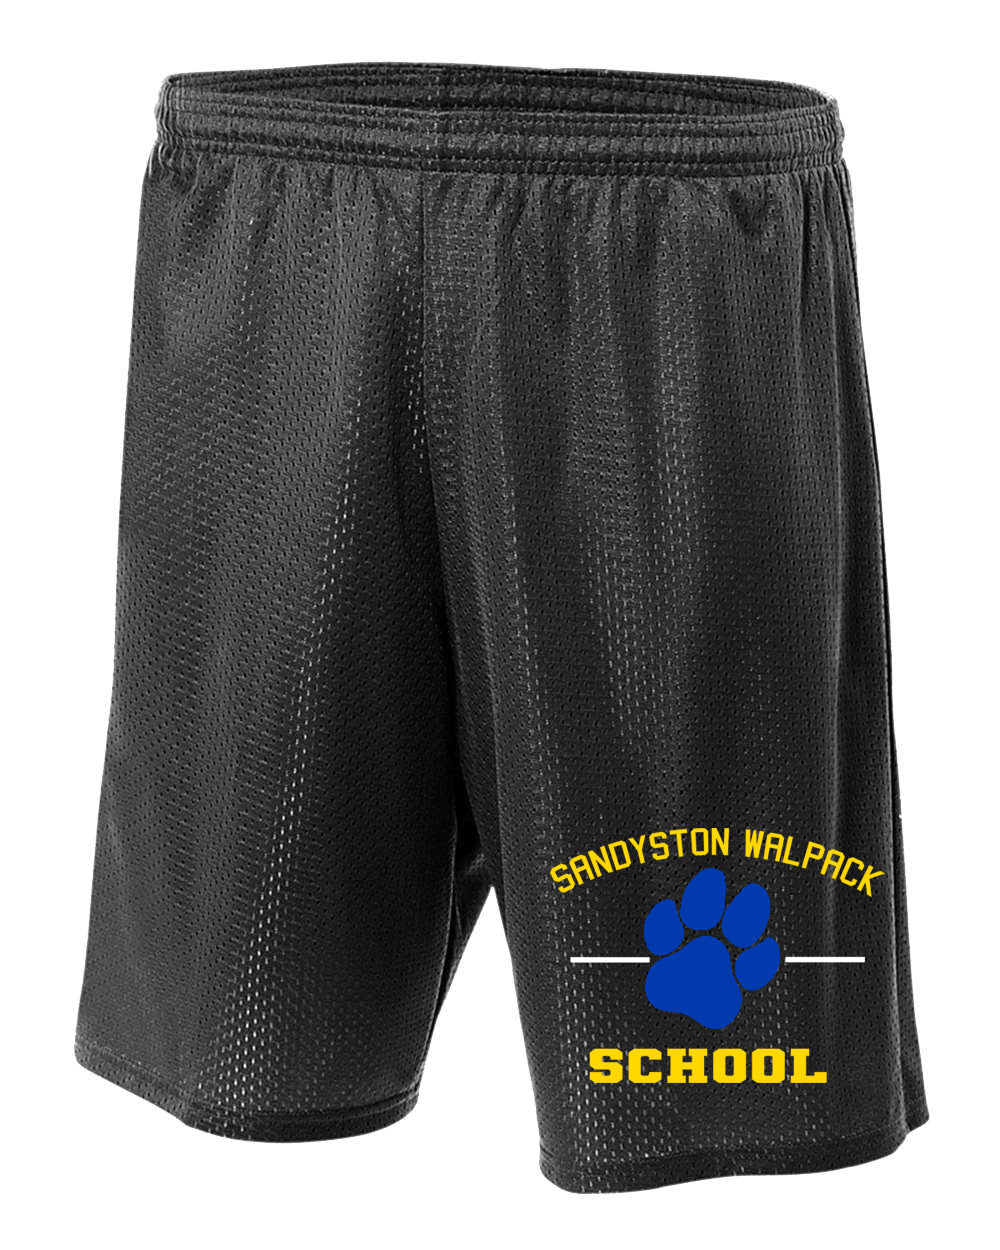 Sandyston Walpack Design 4 Mesh Shorts